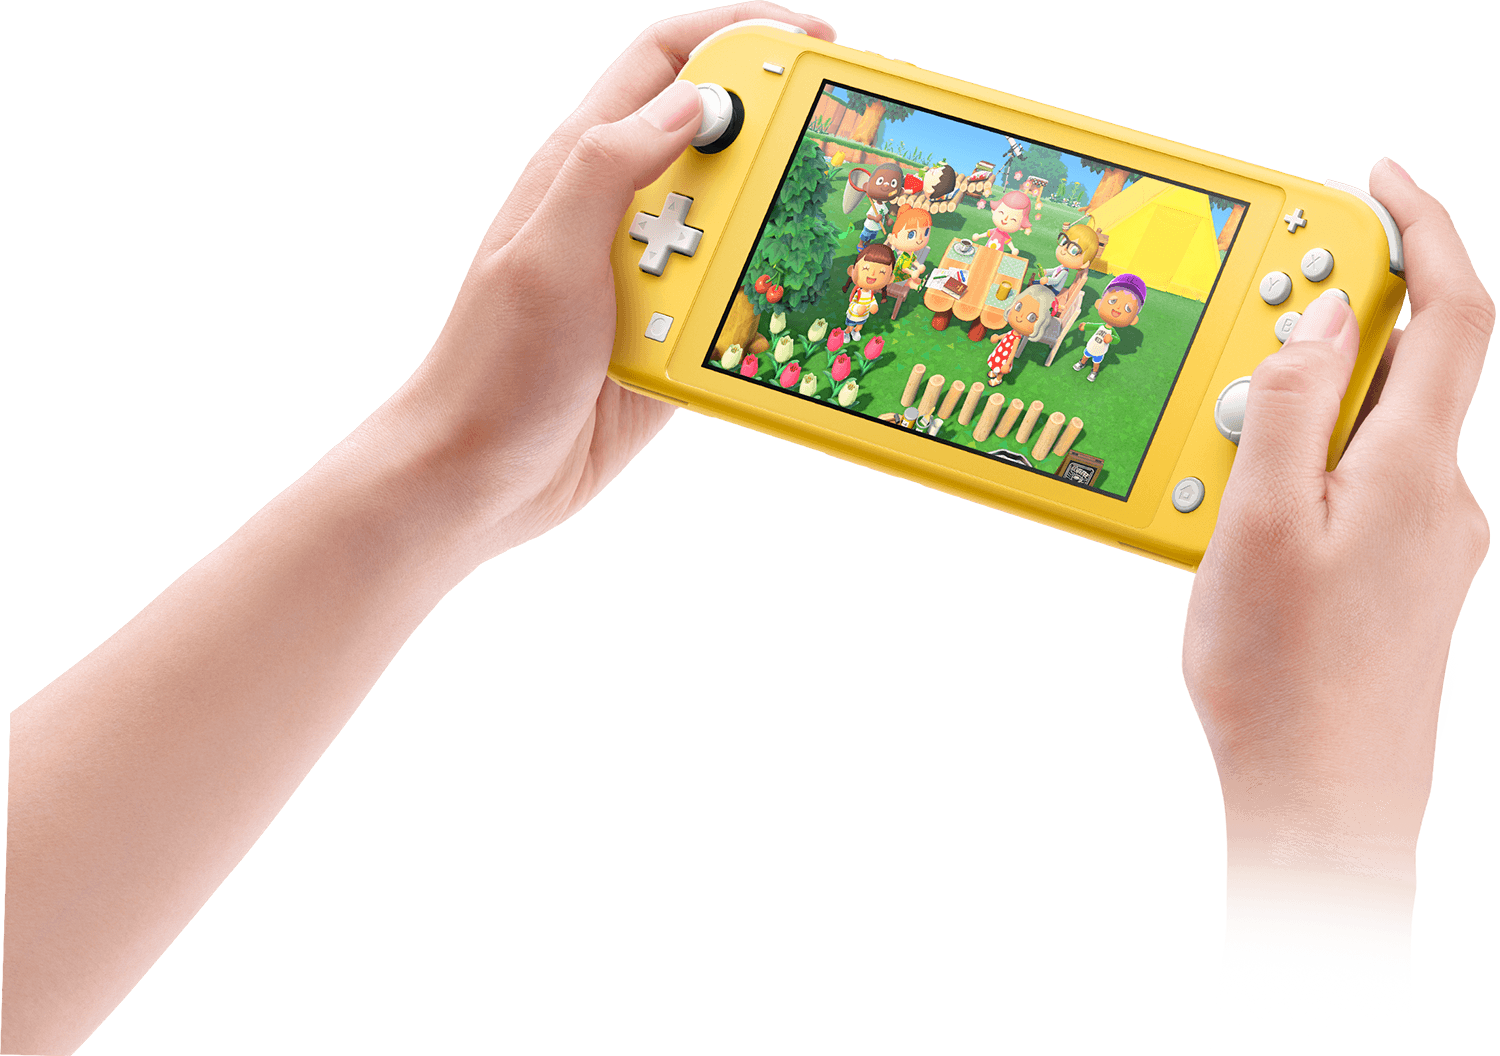 Nintendo Switch ライト 本体 黄色 スイッチ - その他